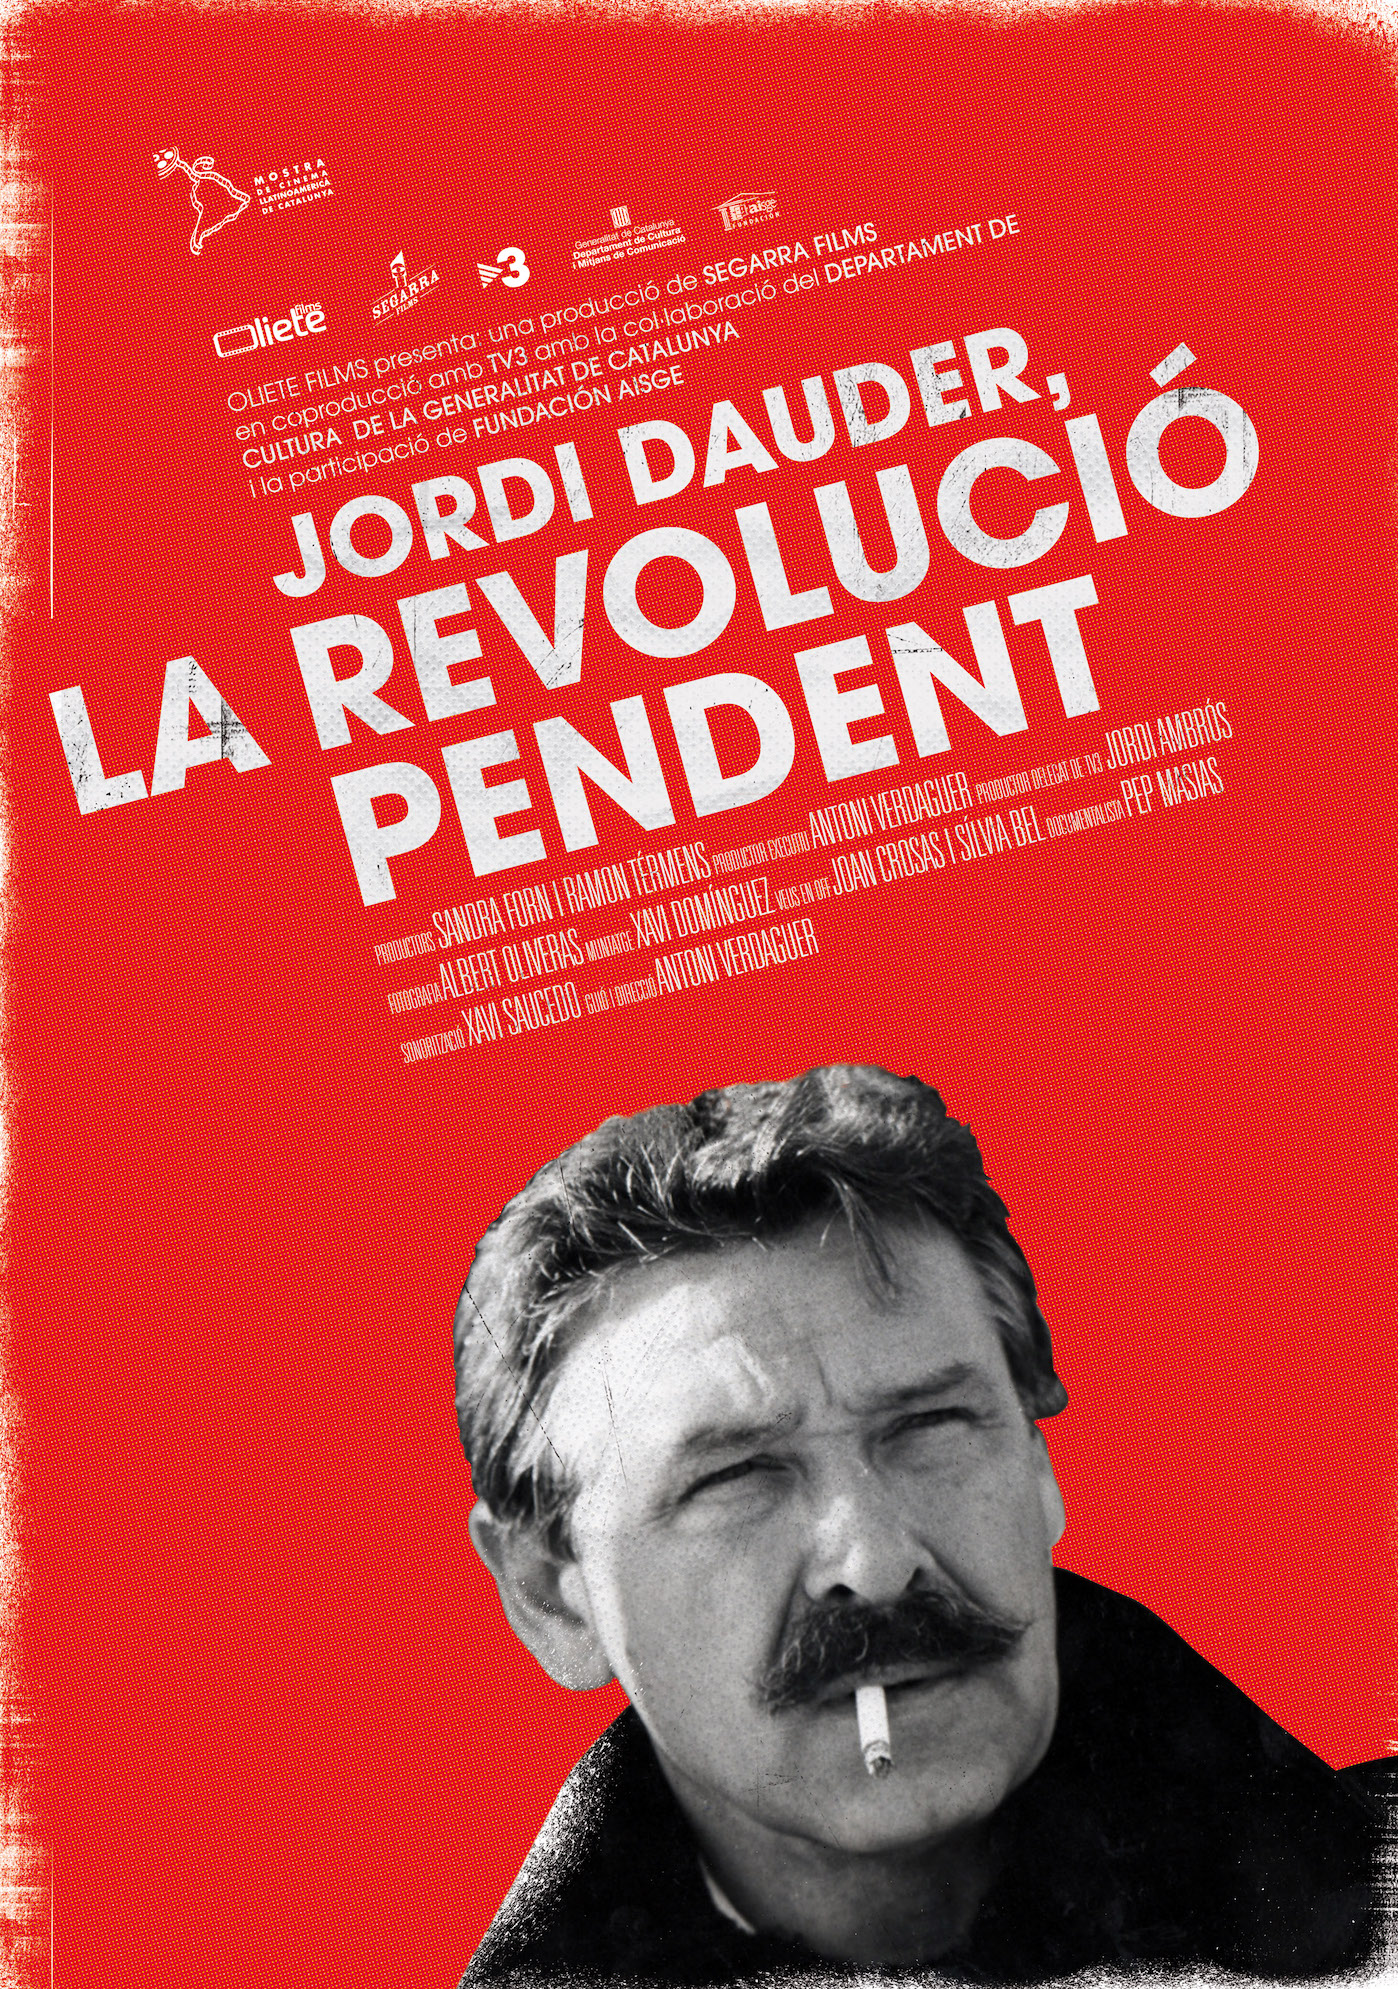 Jordi Dauder, The pending revolution